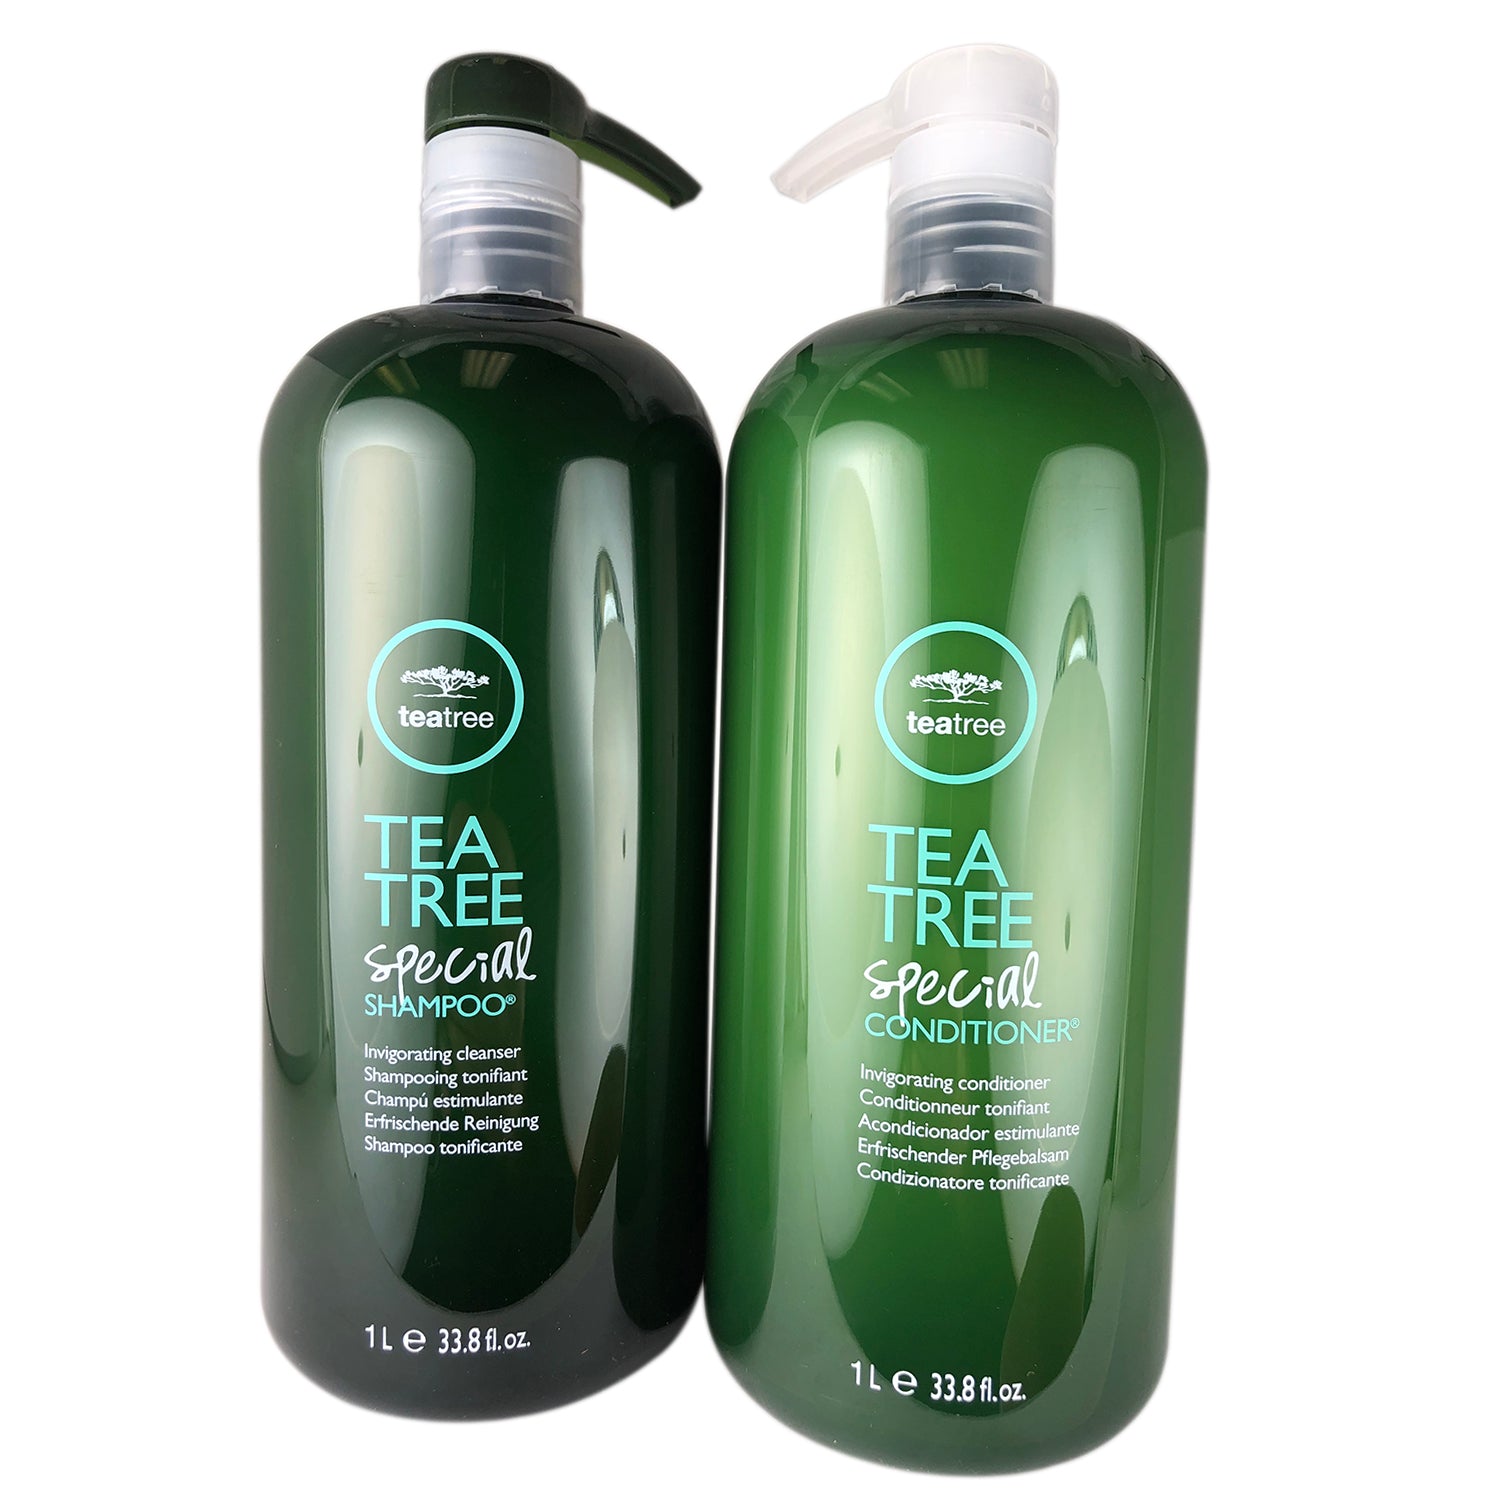 Paul Mitchell Tea Tree Special Shampoo & Conditioner Duo 33.8 oz ea